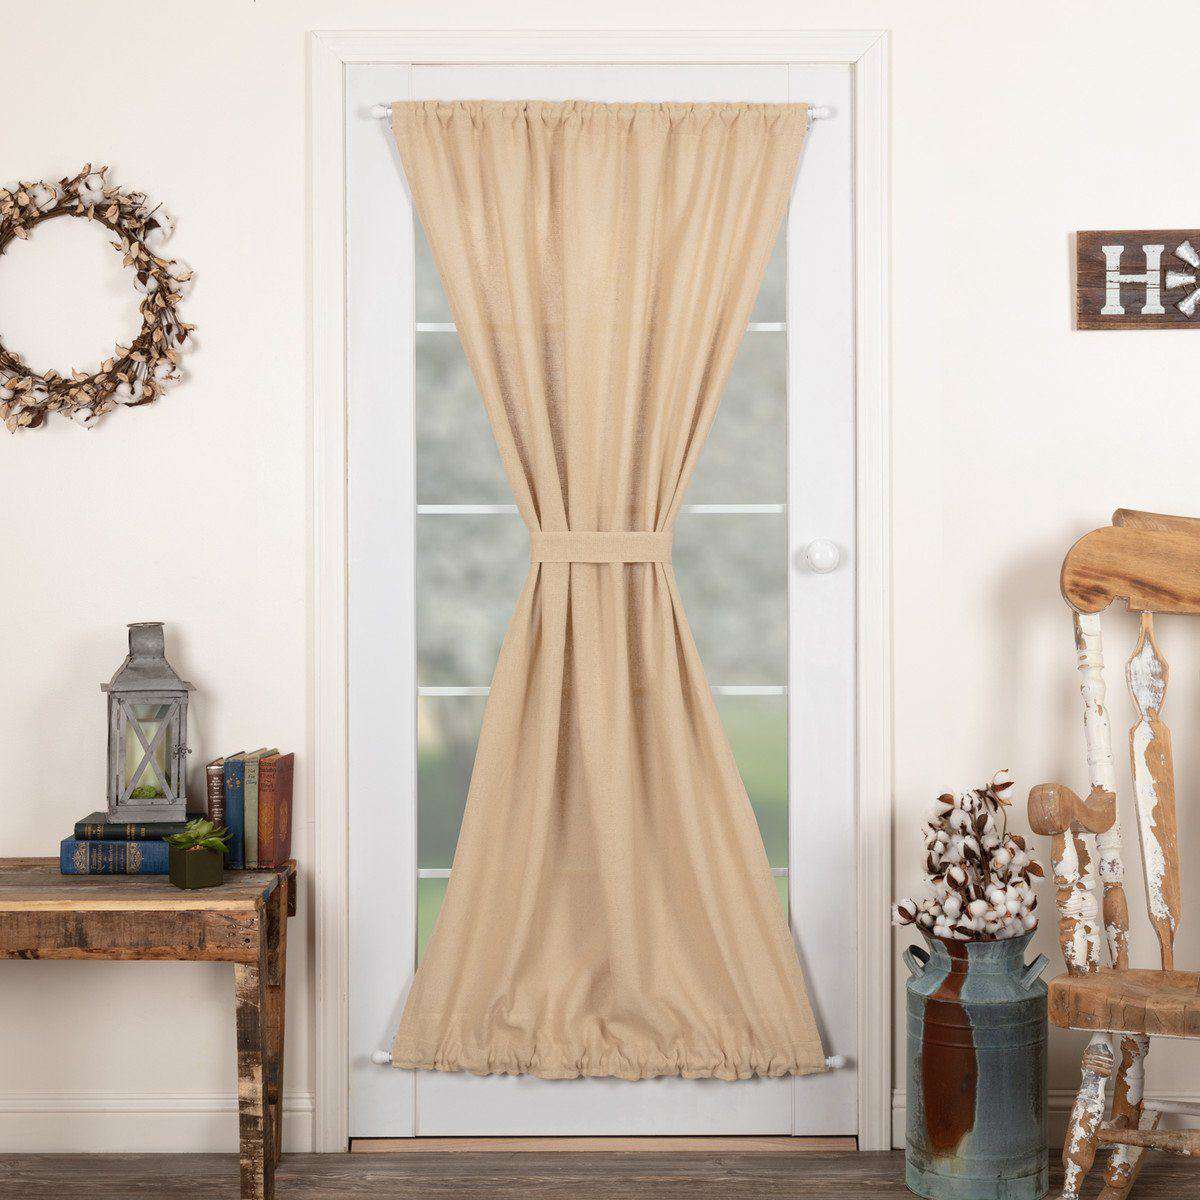 Burlap Vintage Tan/Antique White Door Panel 72"x40" curtain VHC Brands Tan 